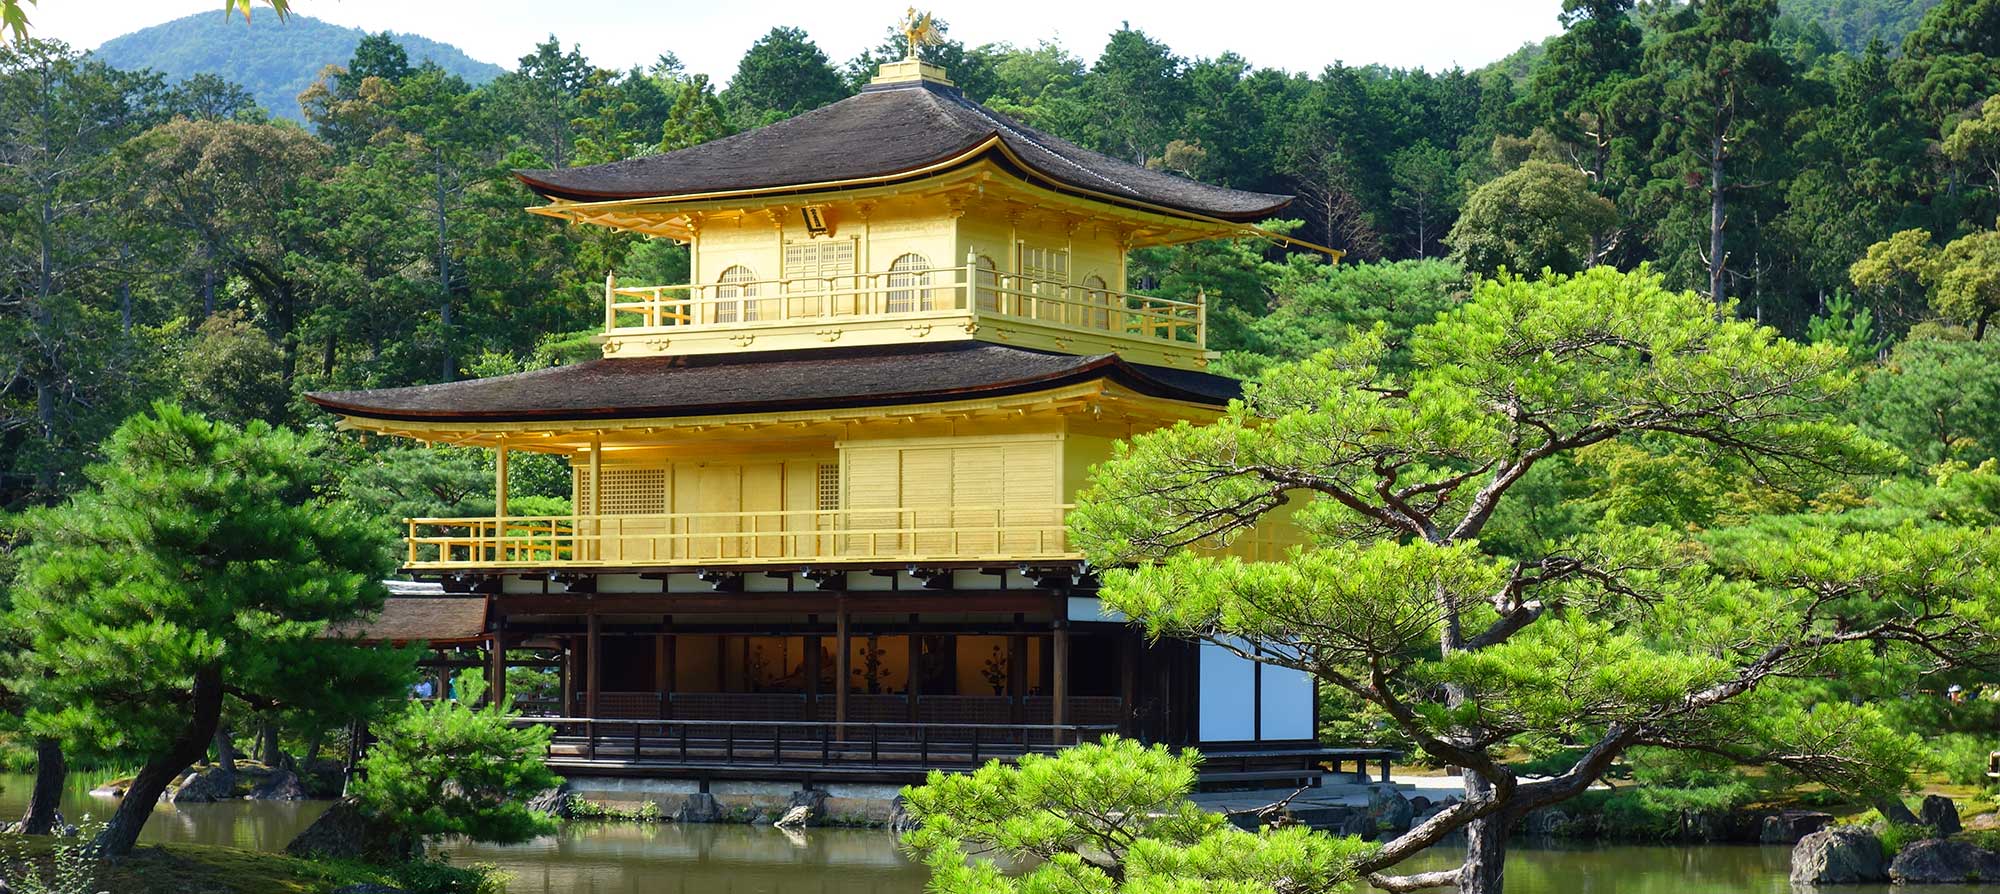 Вид на Золотой павильон в Киото